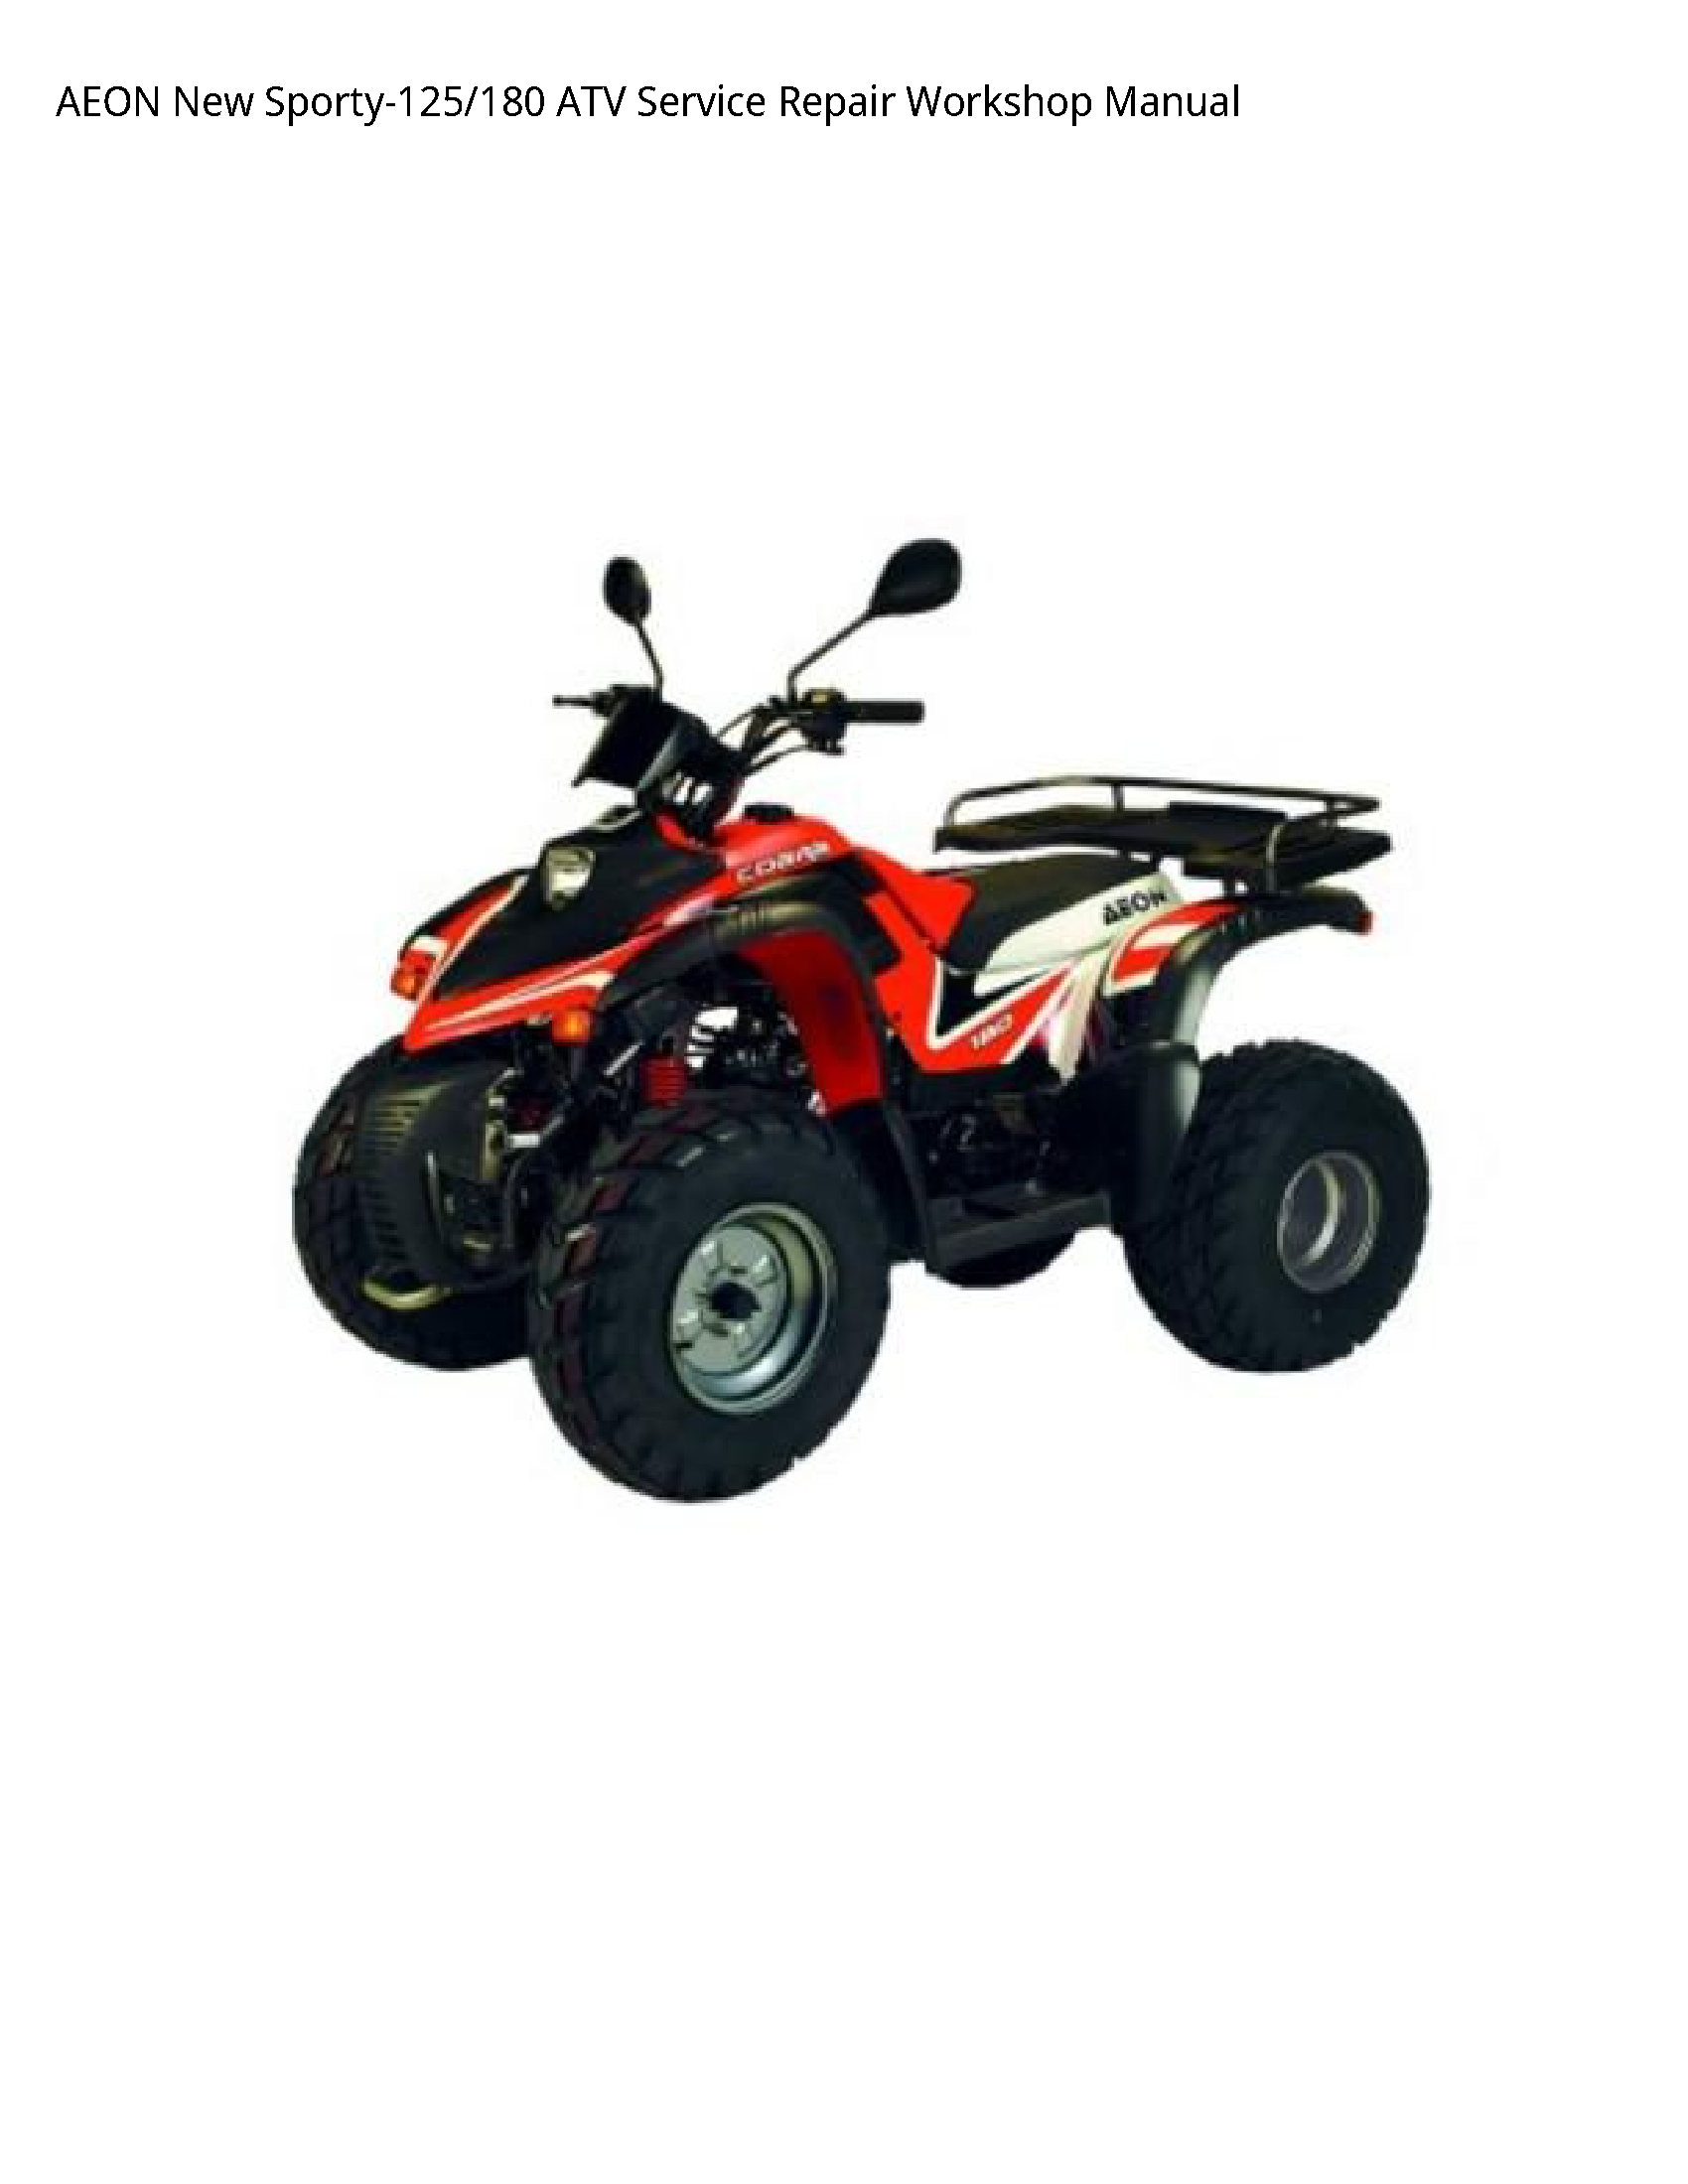 AEON Sporty-125 New ATV manual